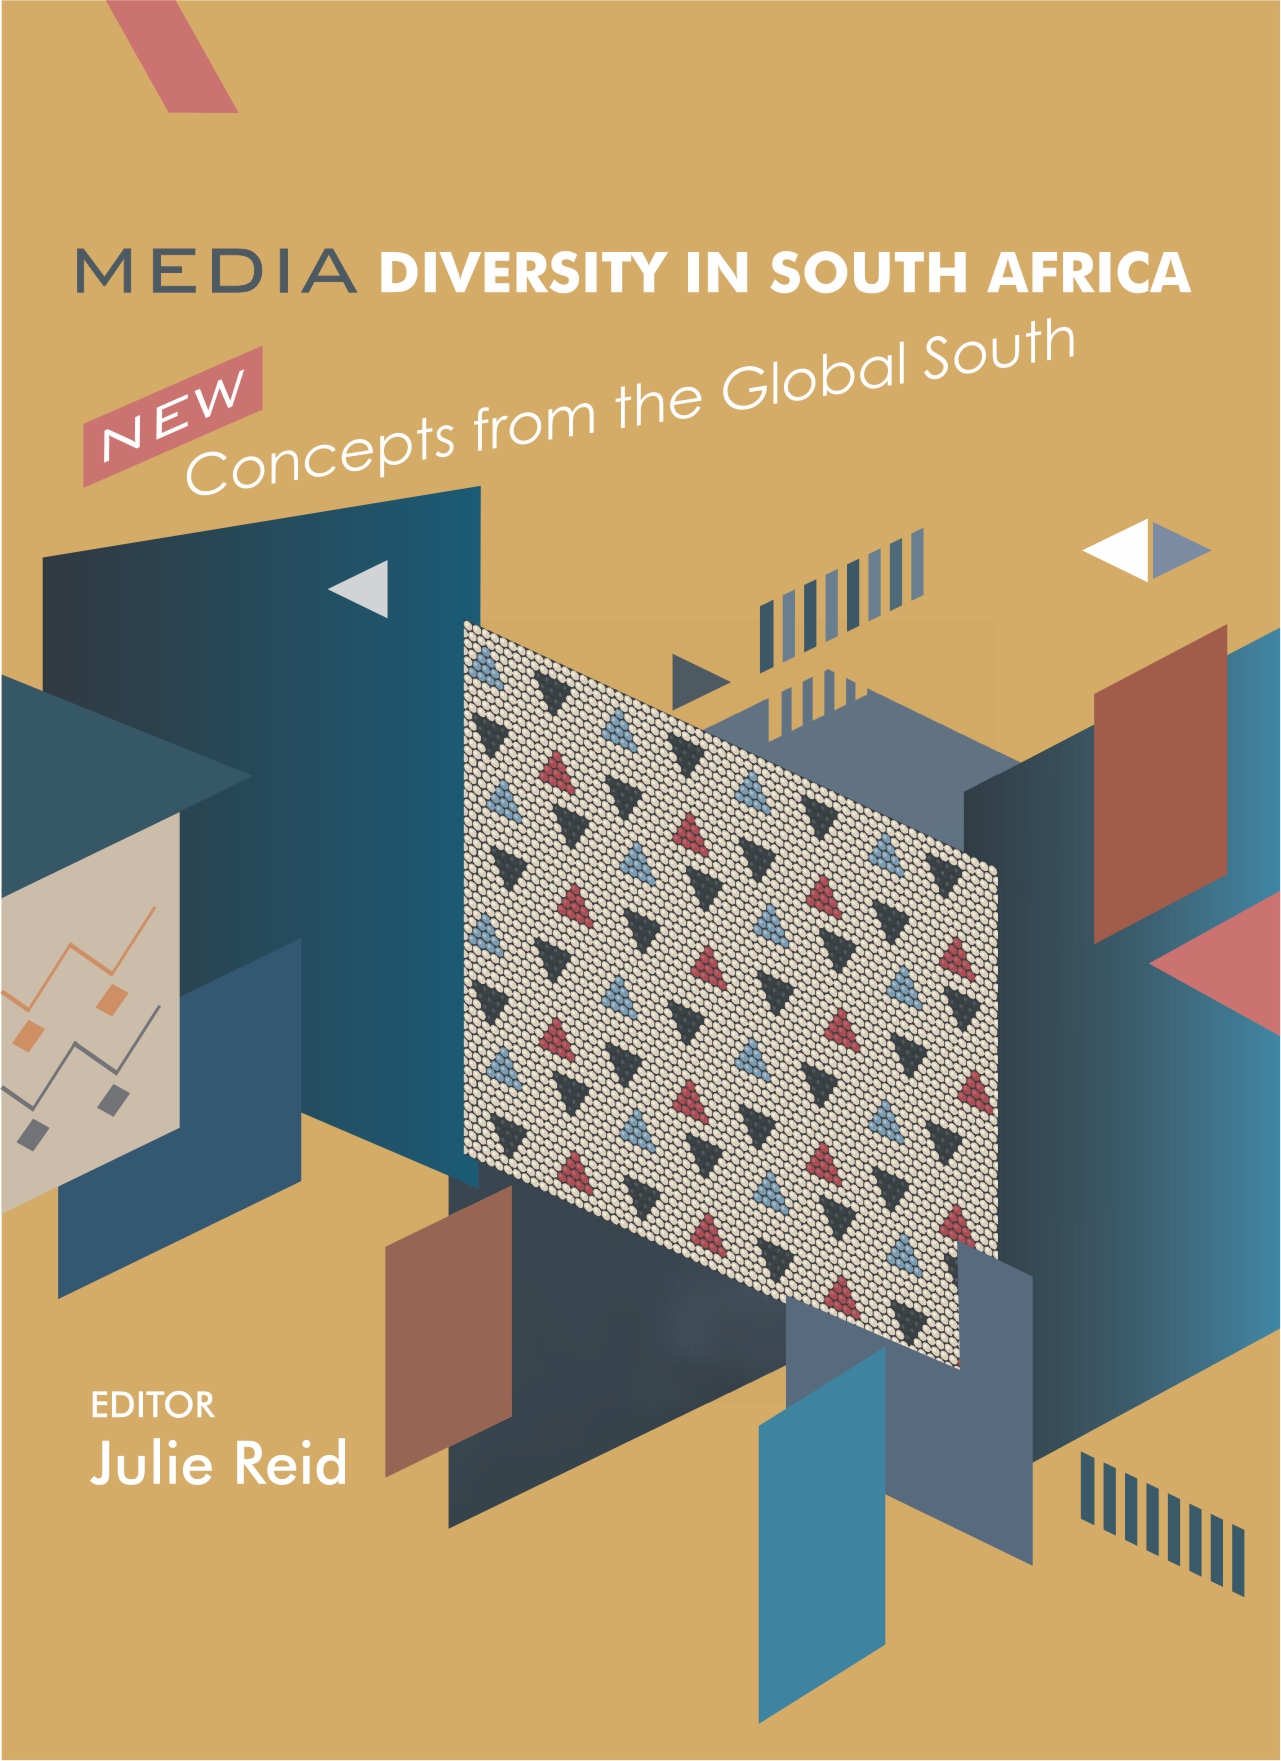 Media diversity cover marketing.jpg